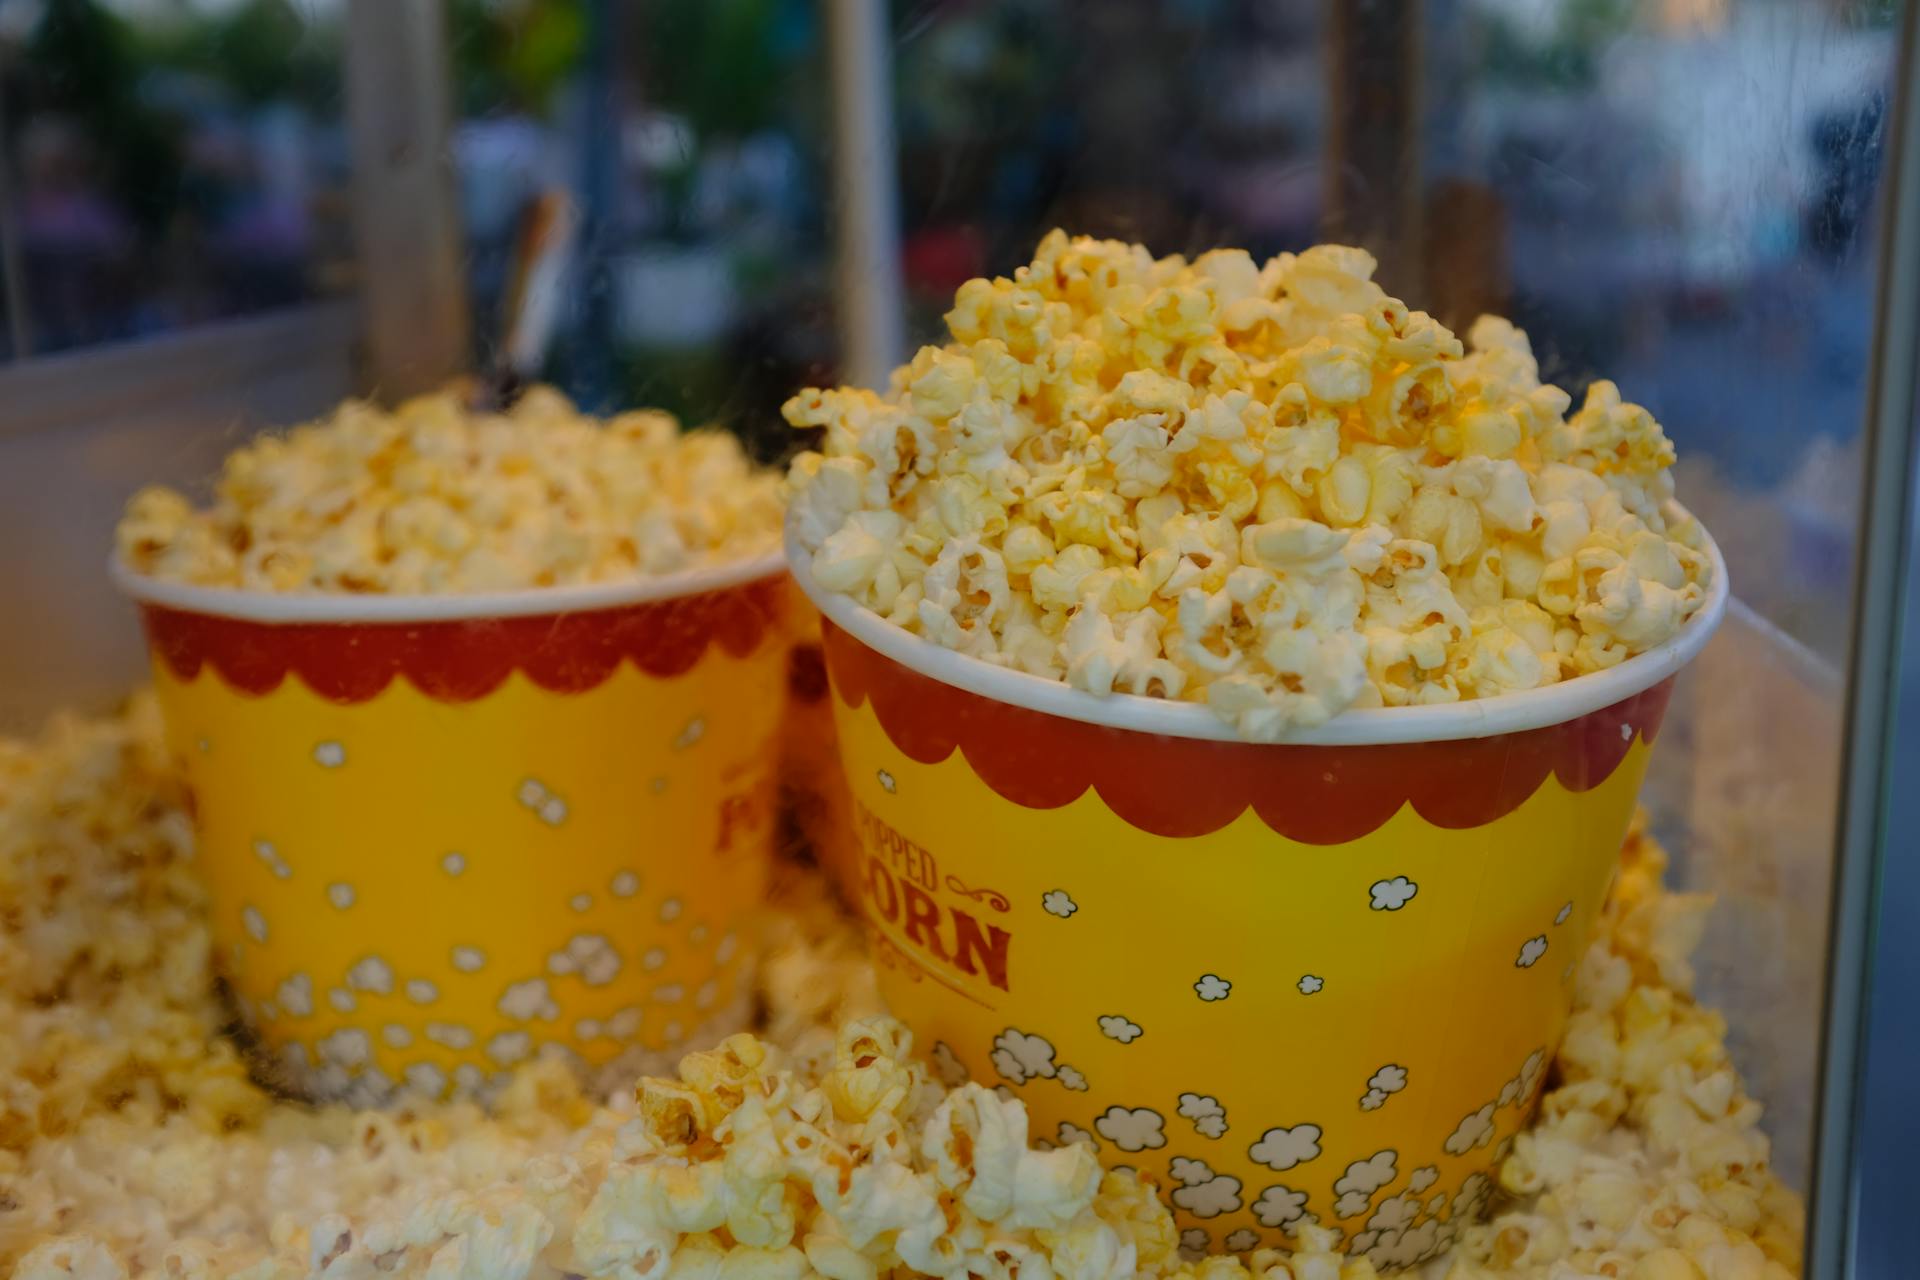 Popcorn at the cinema.